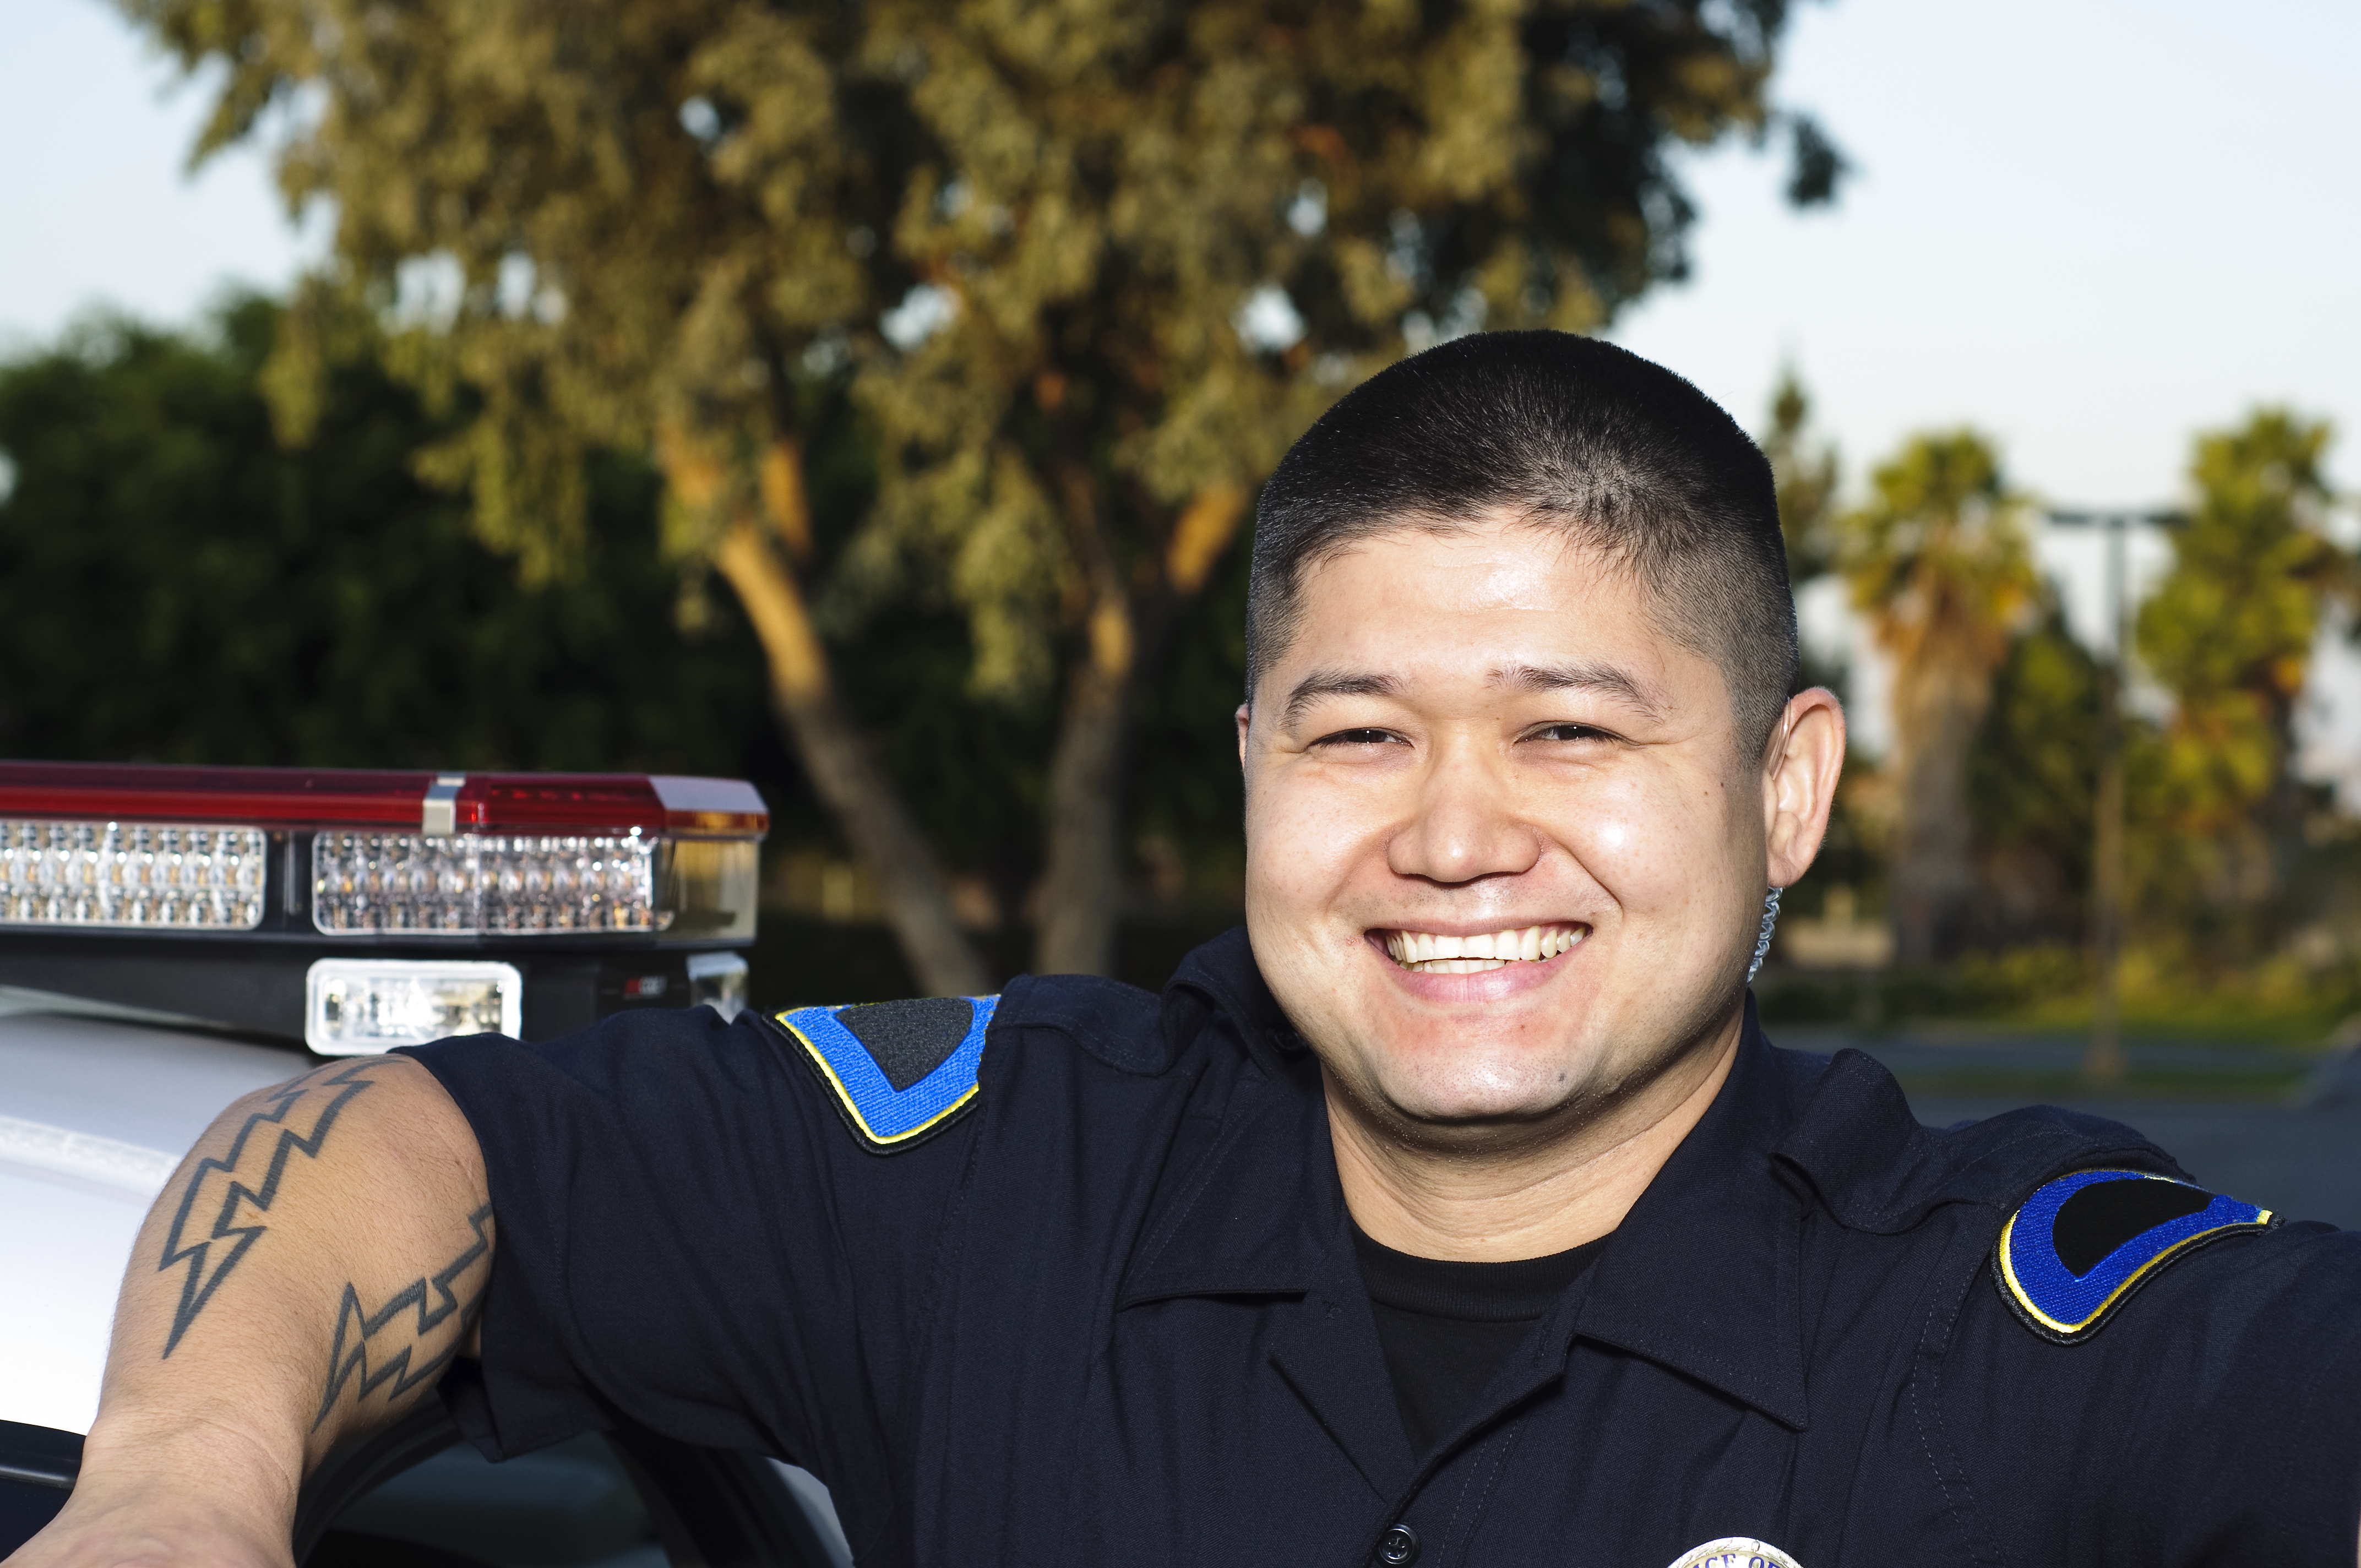 Smiling Police Officer